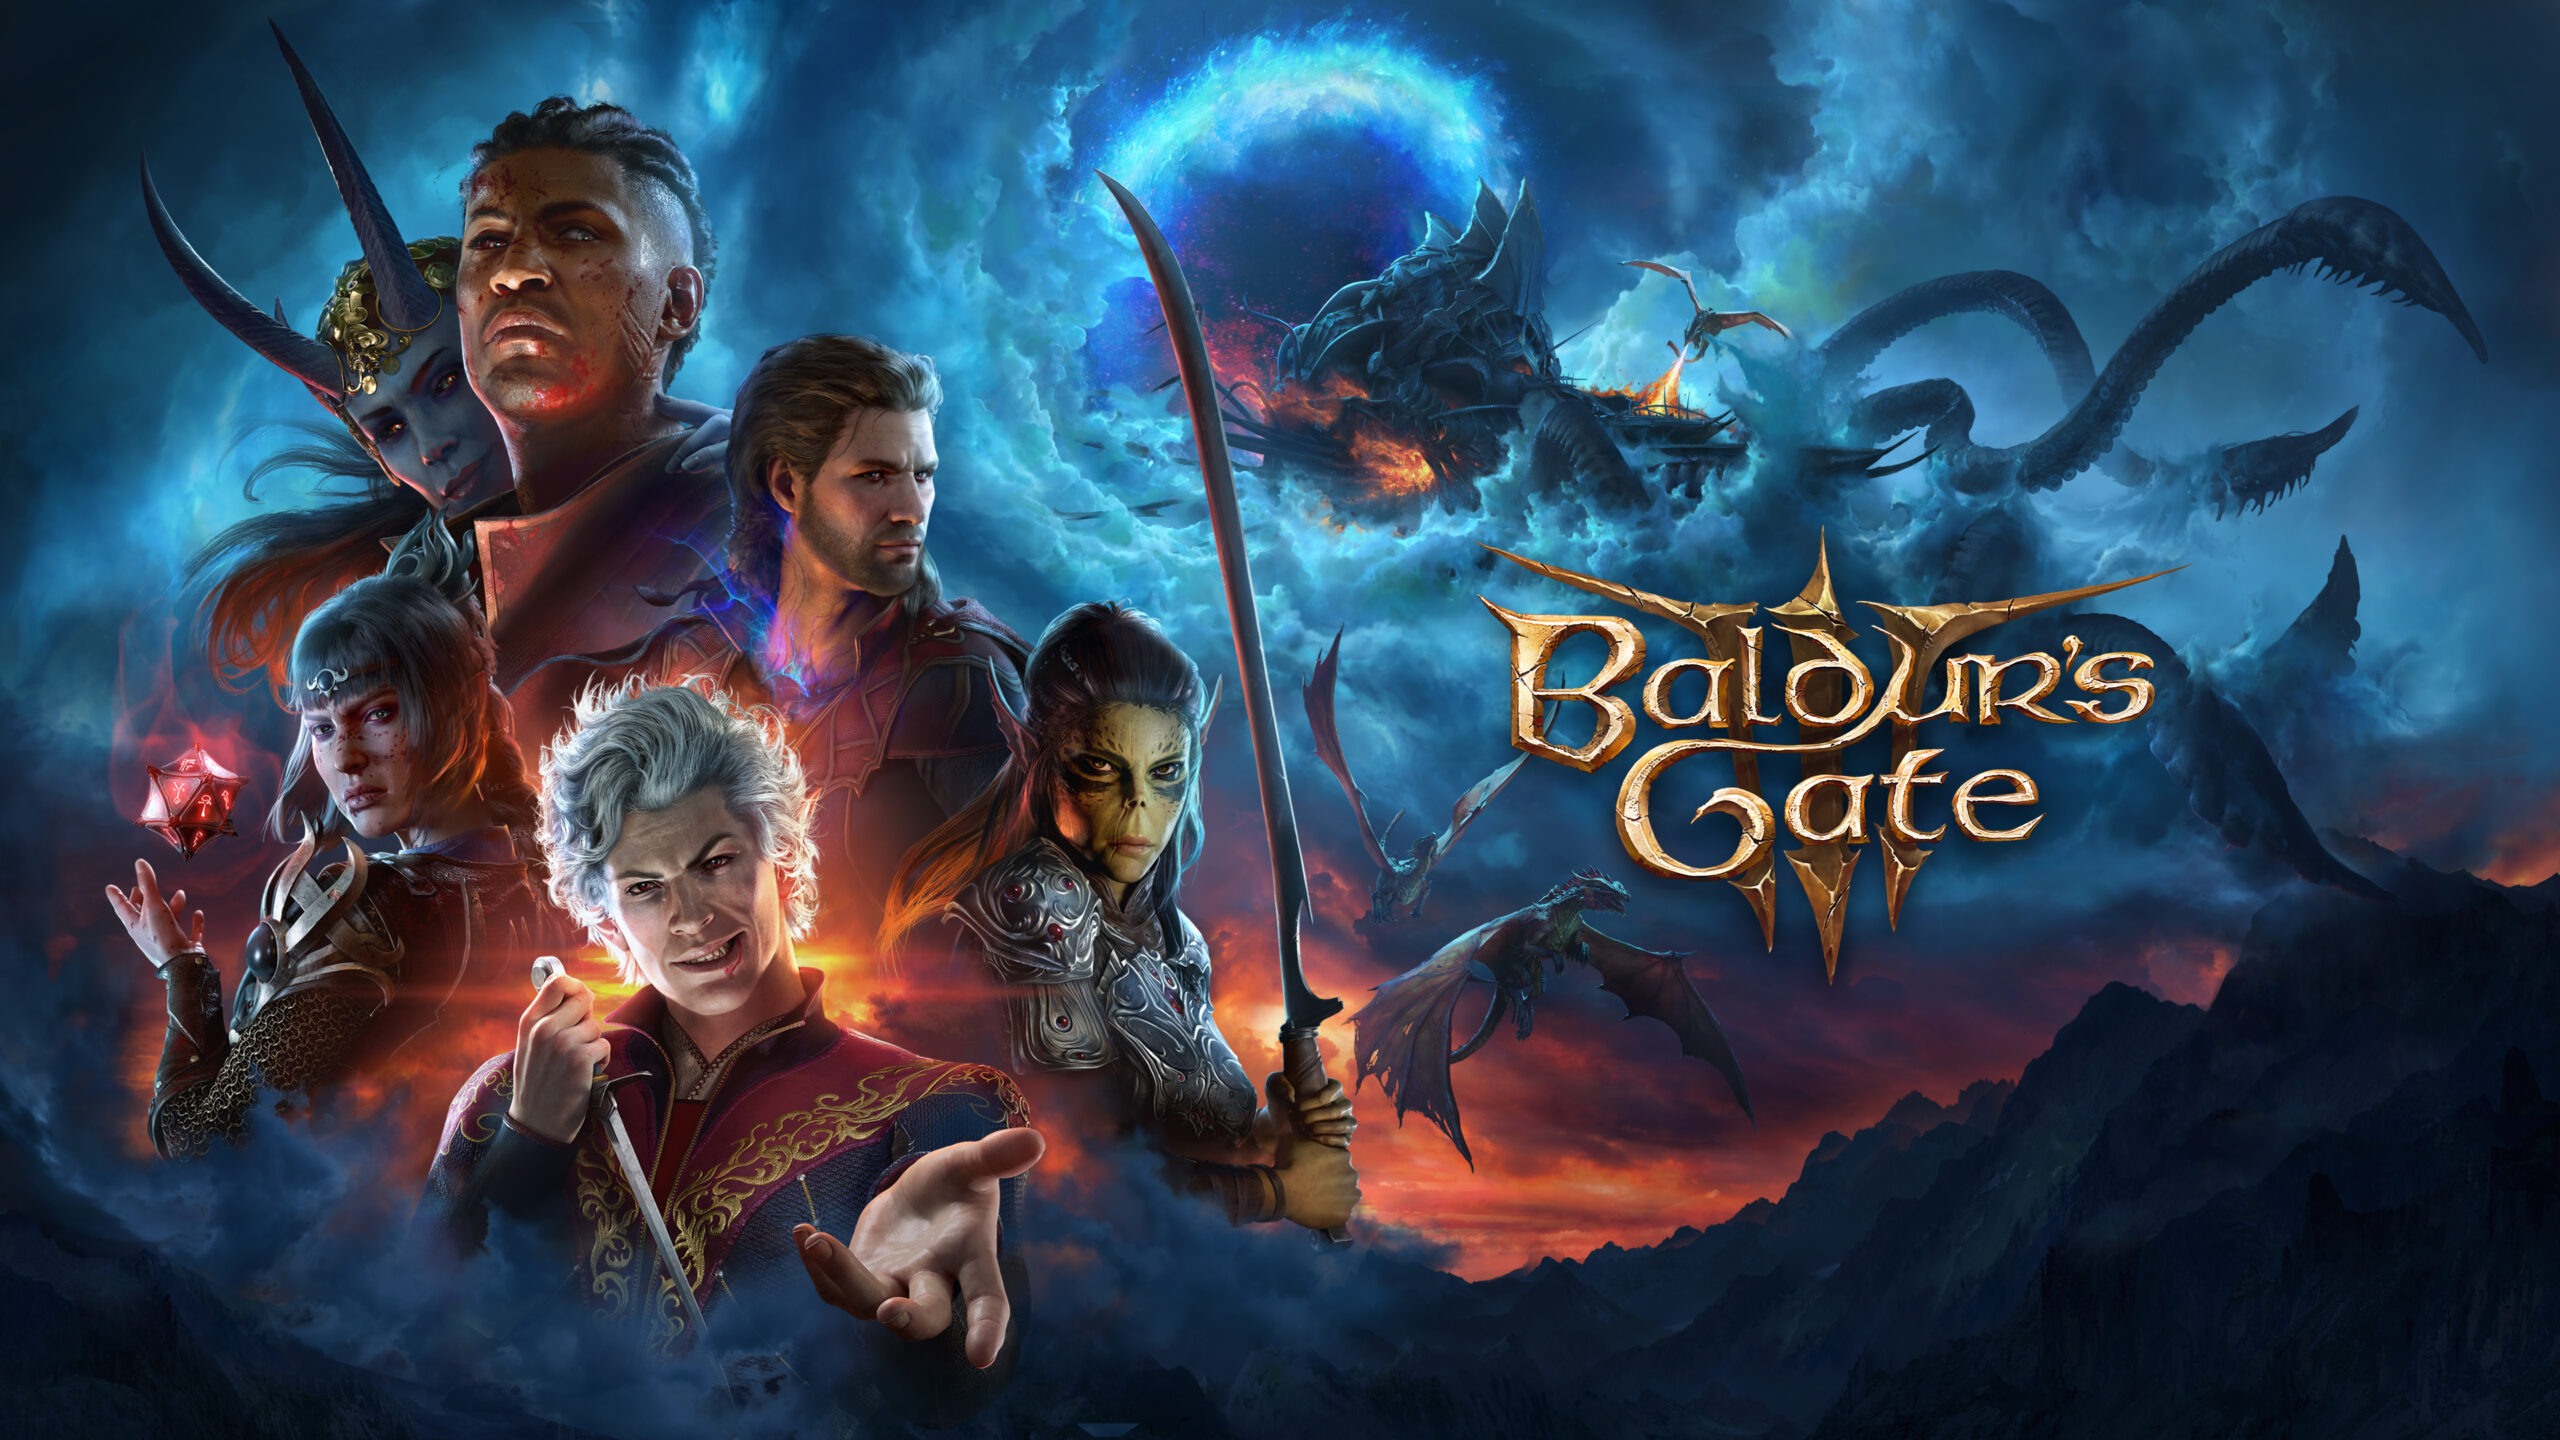 Baldur’s Gate 3 Release Trailer Showcases Romance?